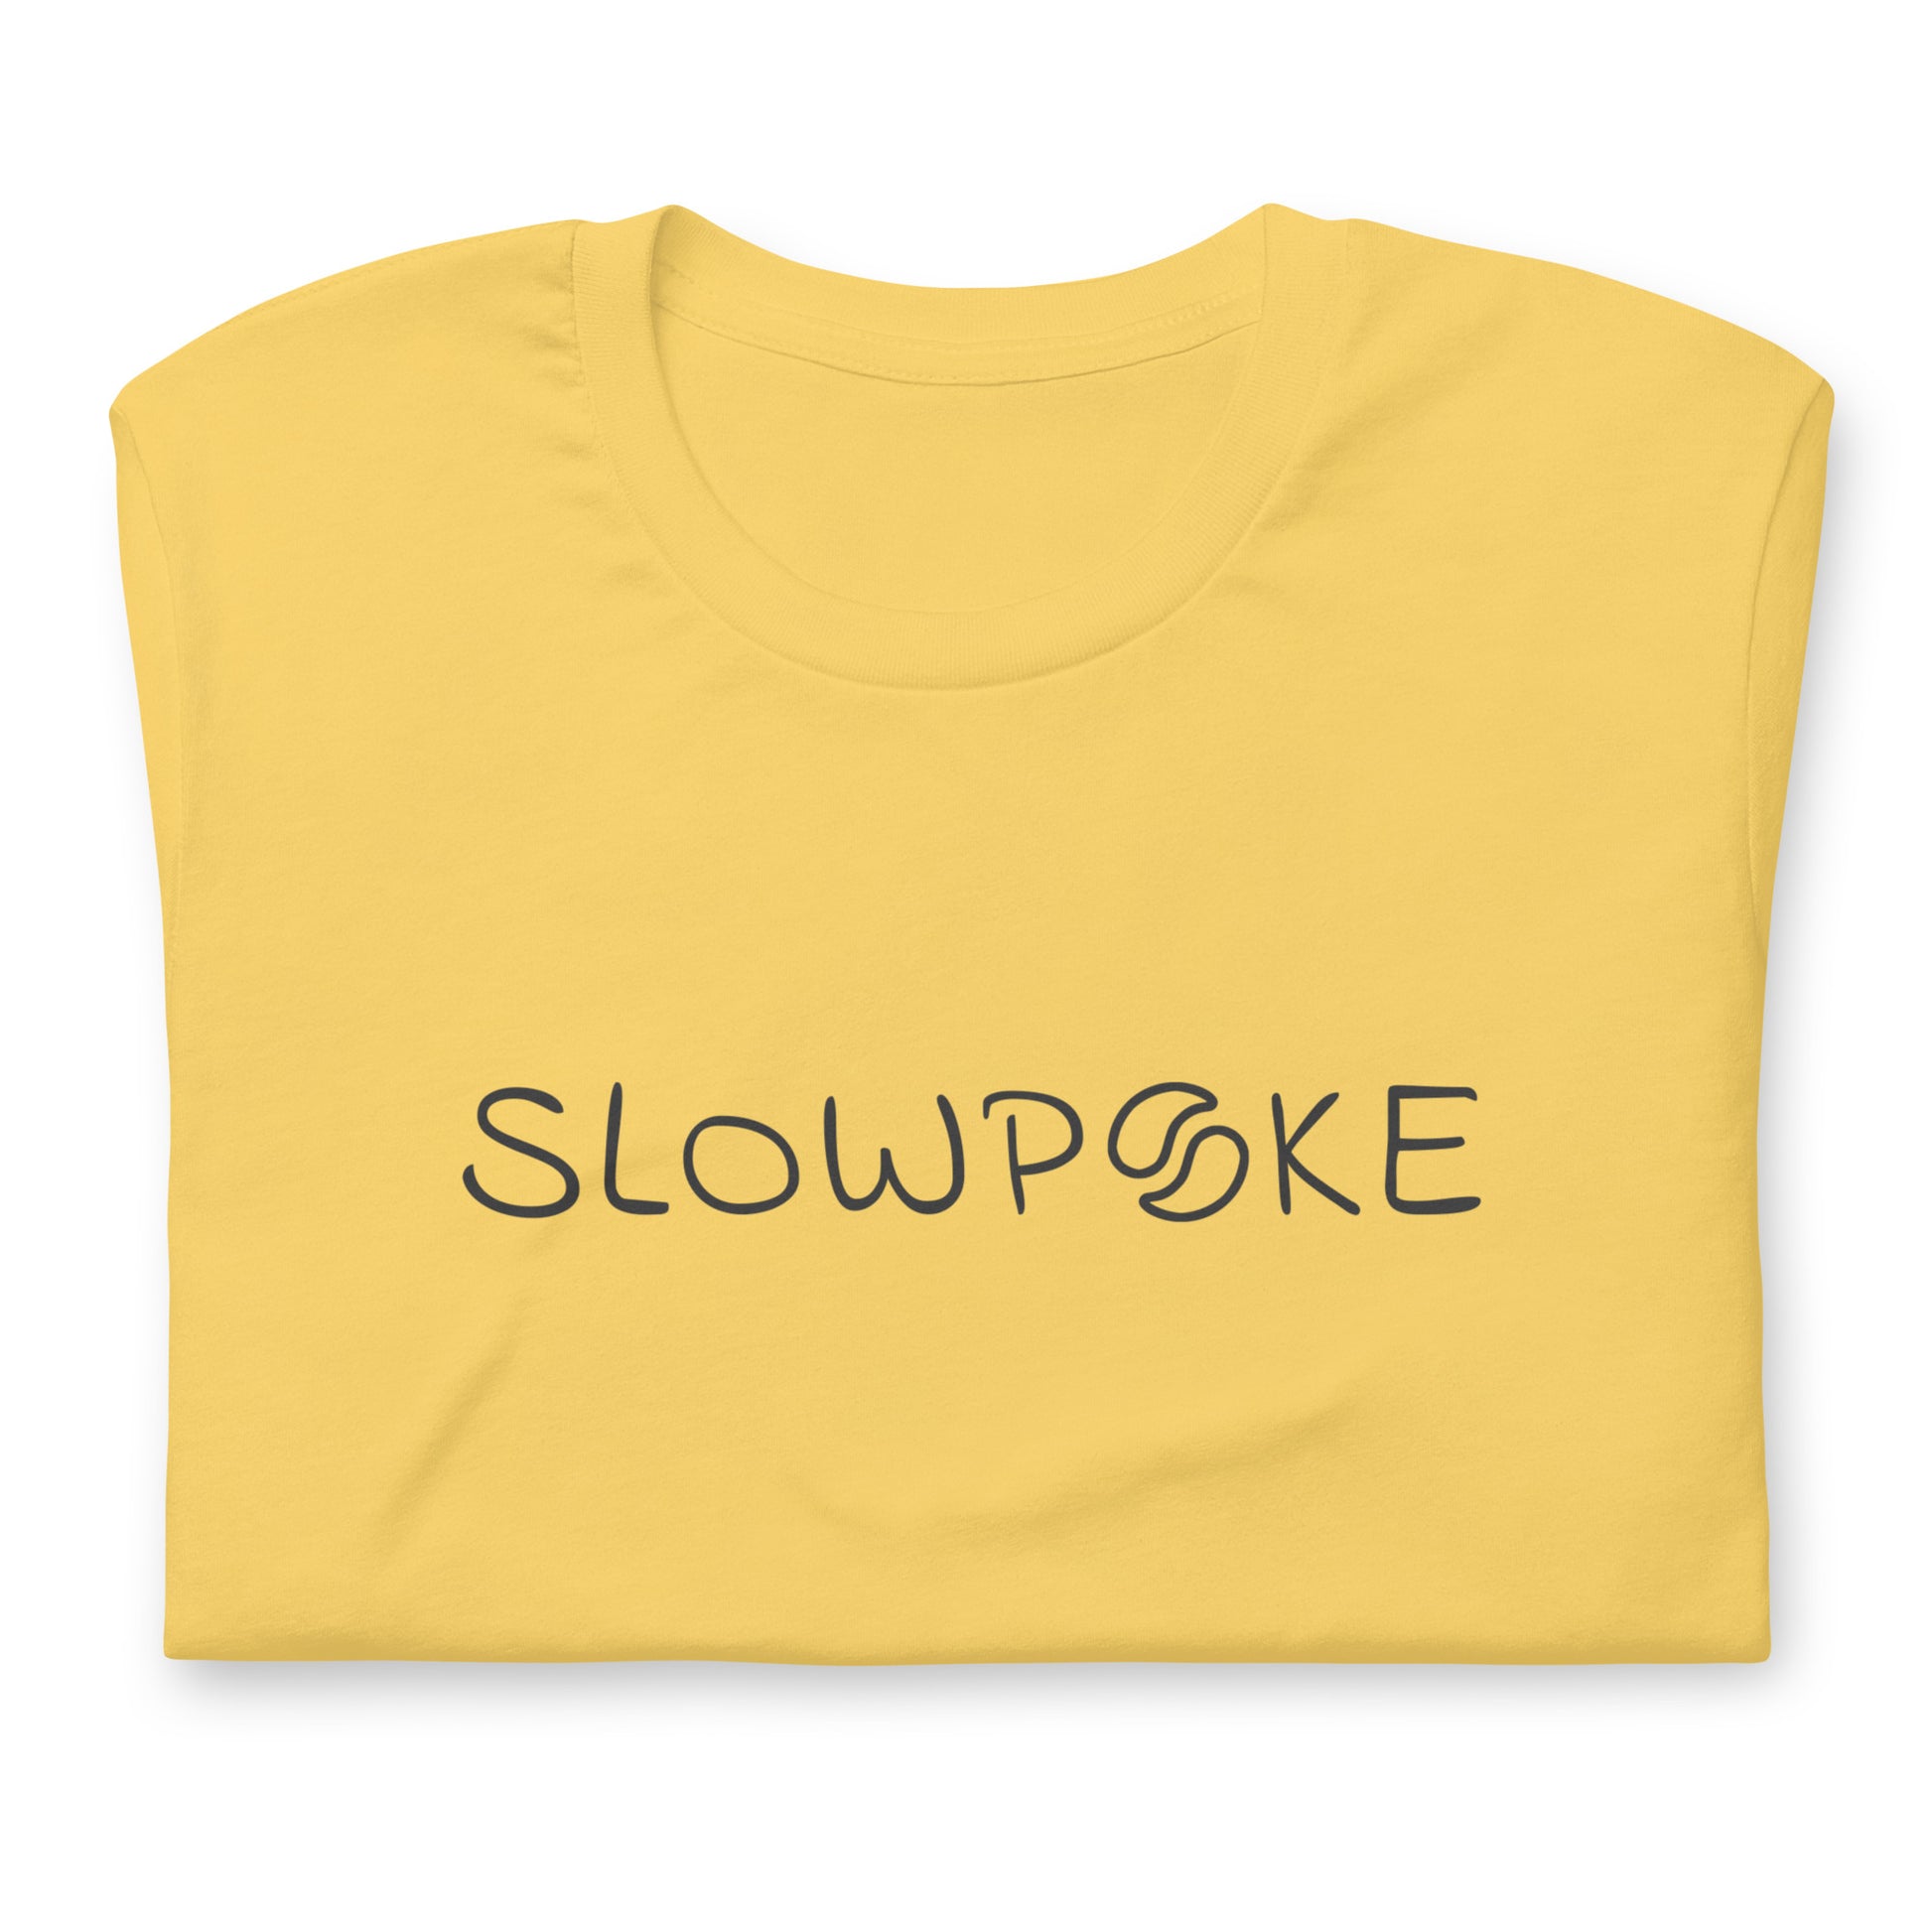 Team Slowpoke Tee Yellow